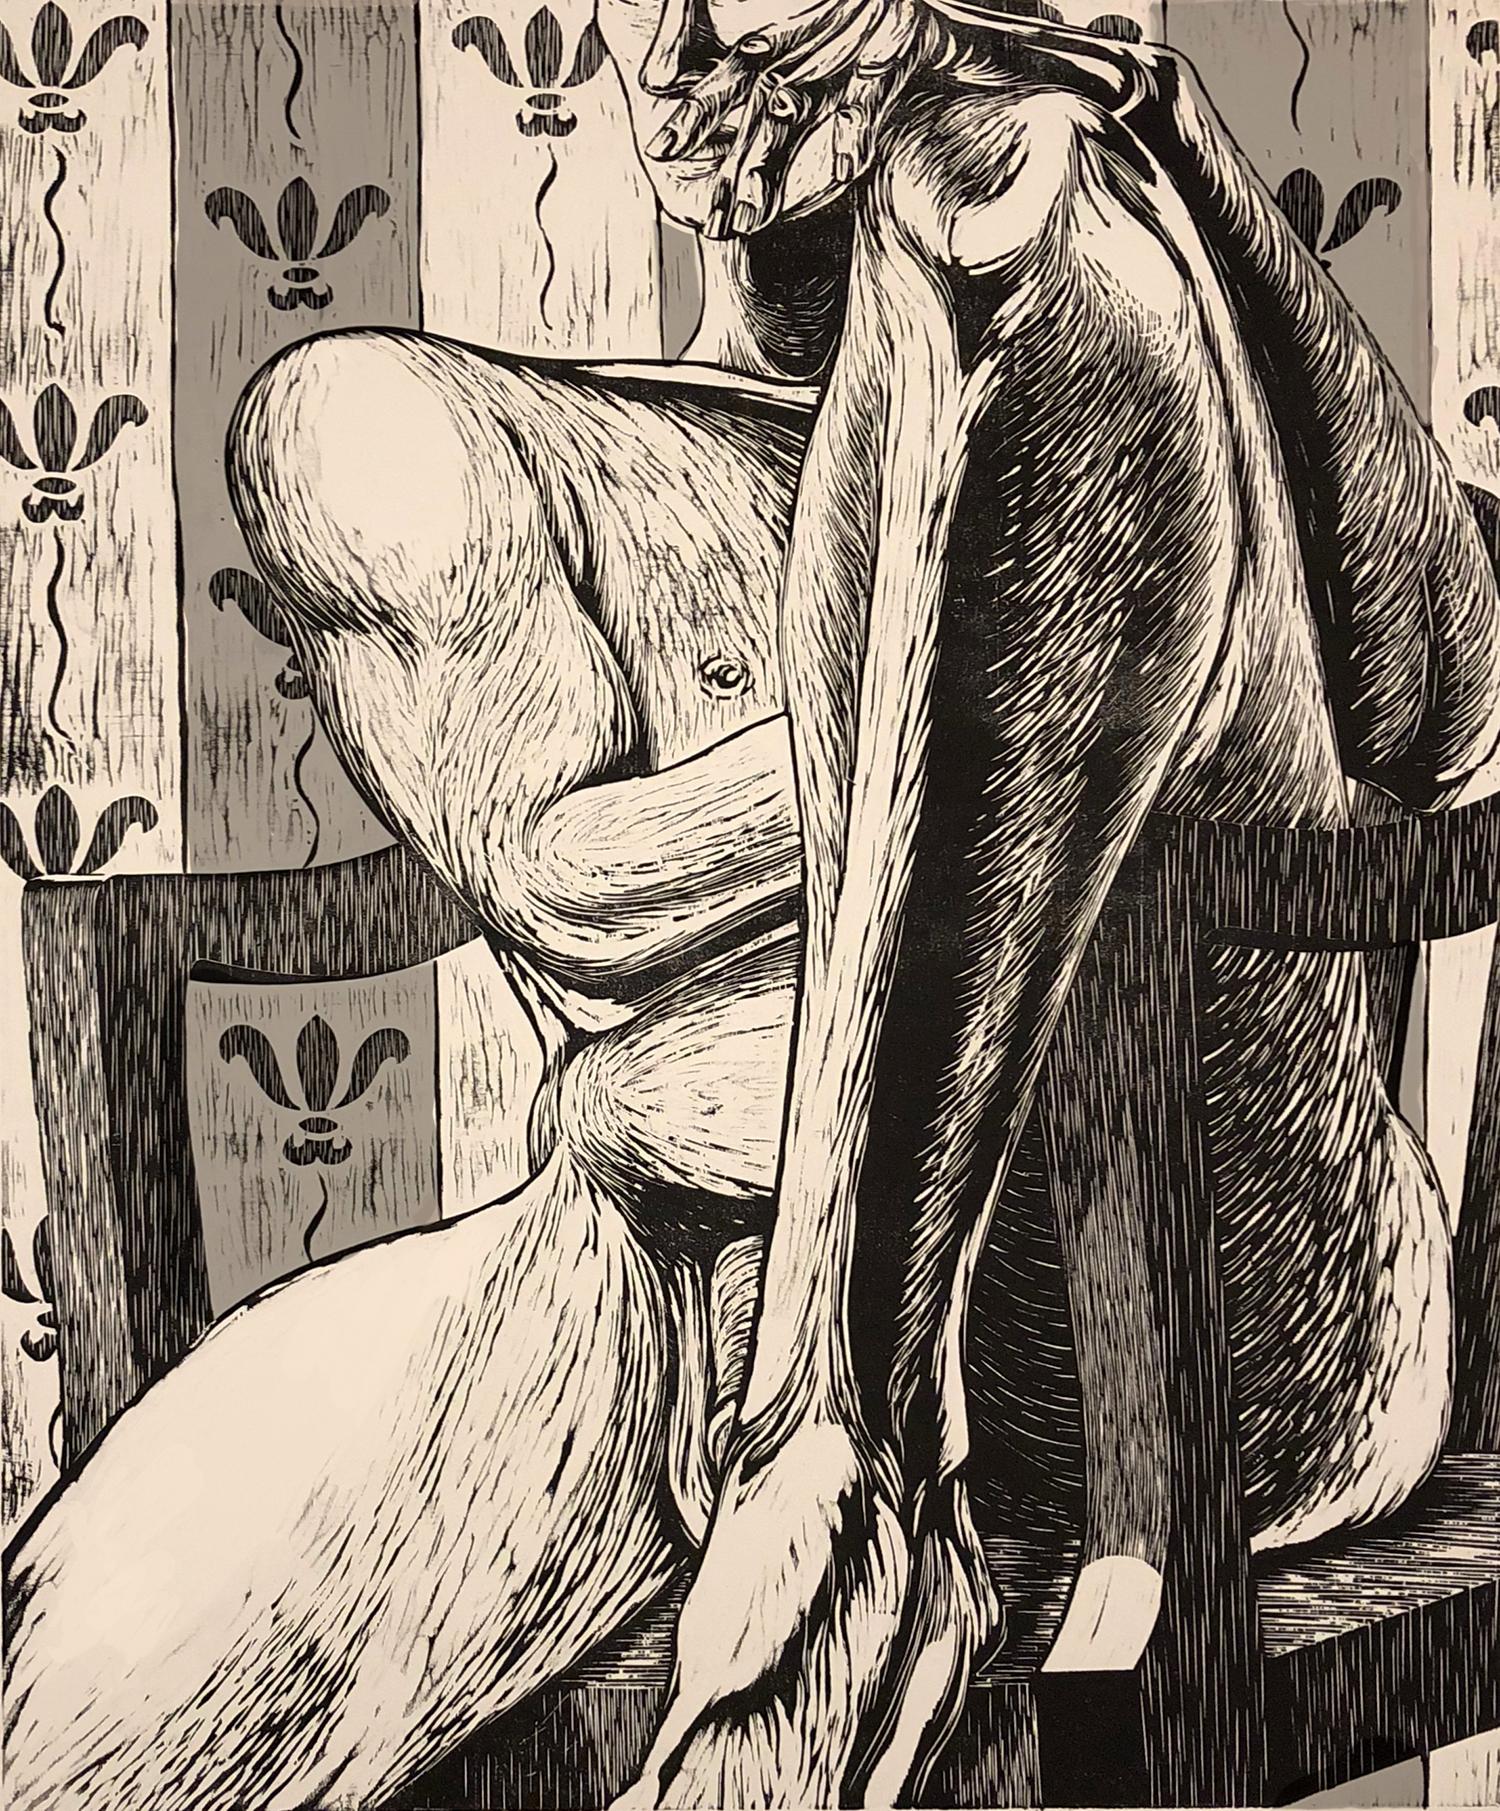 Susan Kiefer Nude Print - Rex (woodcut print, male figure, neutral colors, pattern)